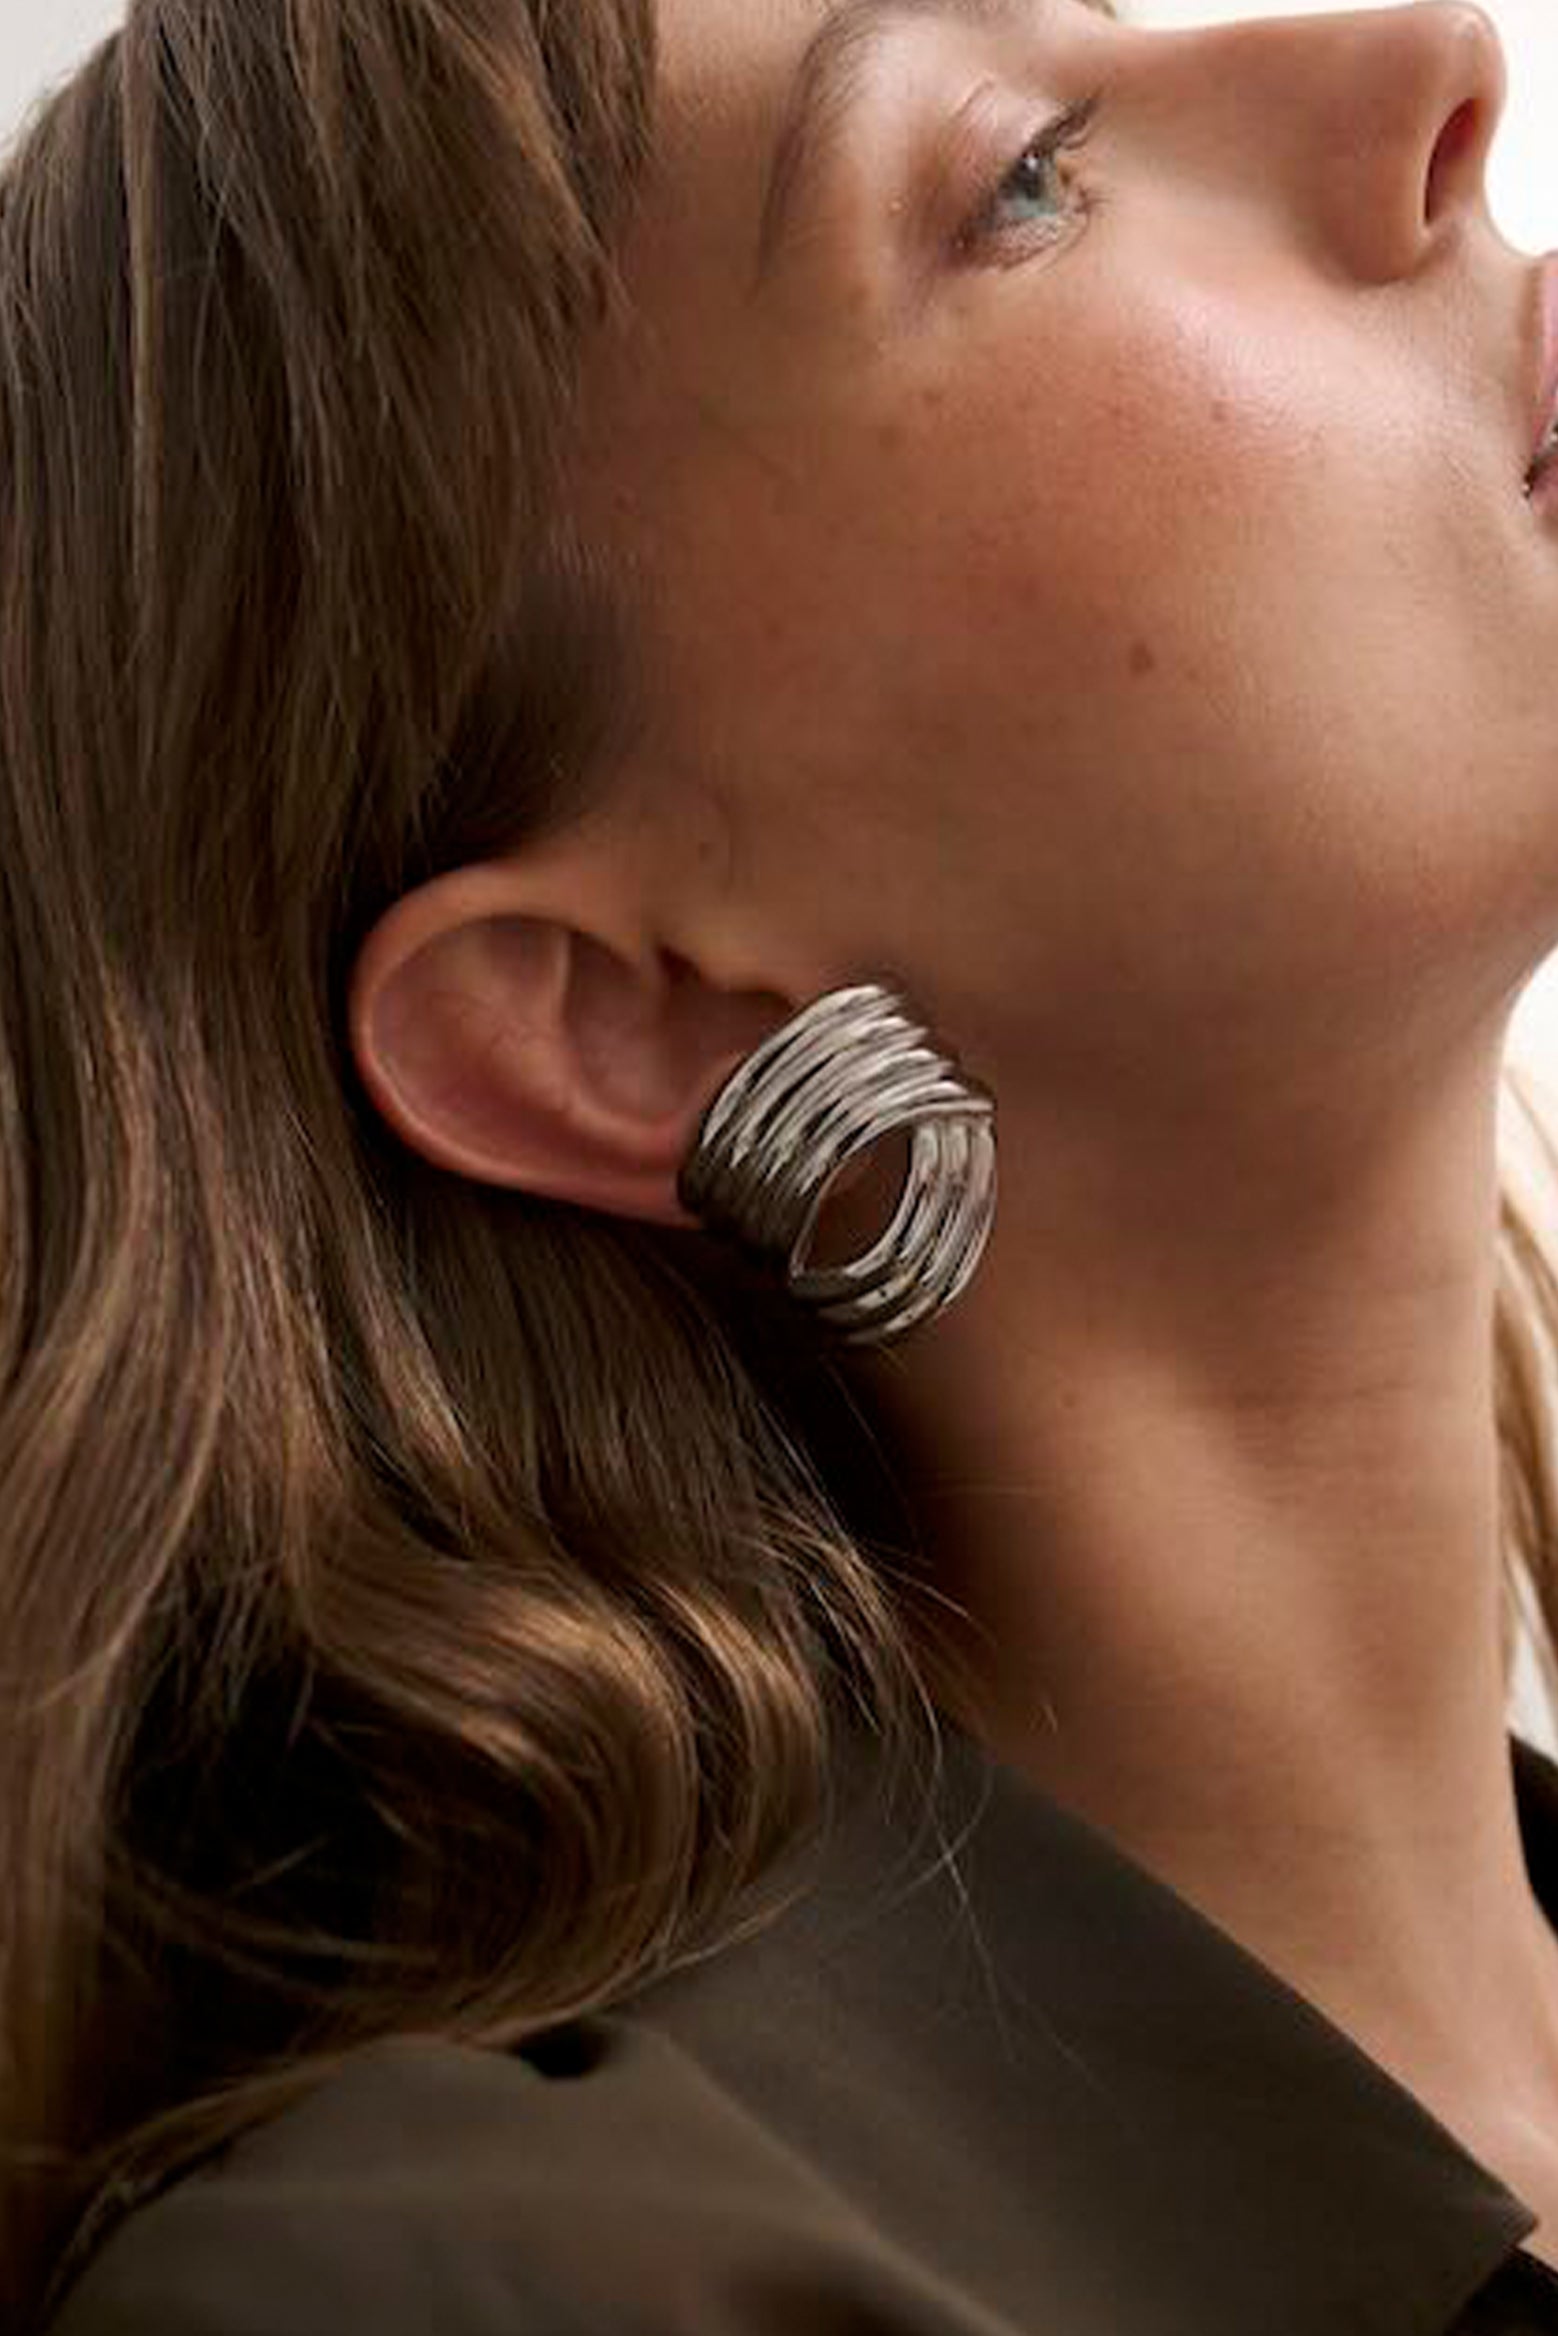 Anna Rossi Nefertiti Earring in Gunmetal available at The New Trend Australia. 